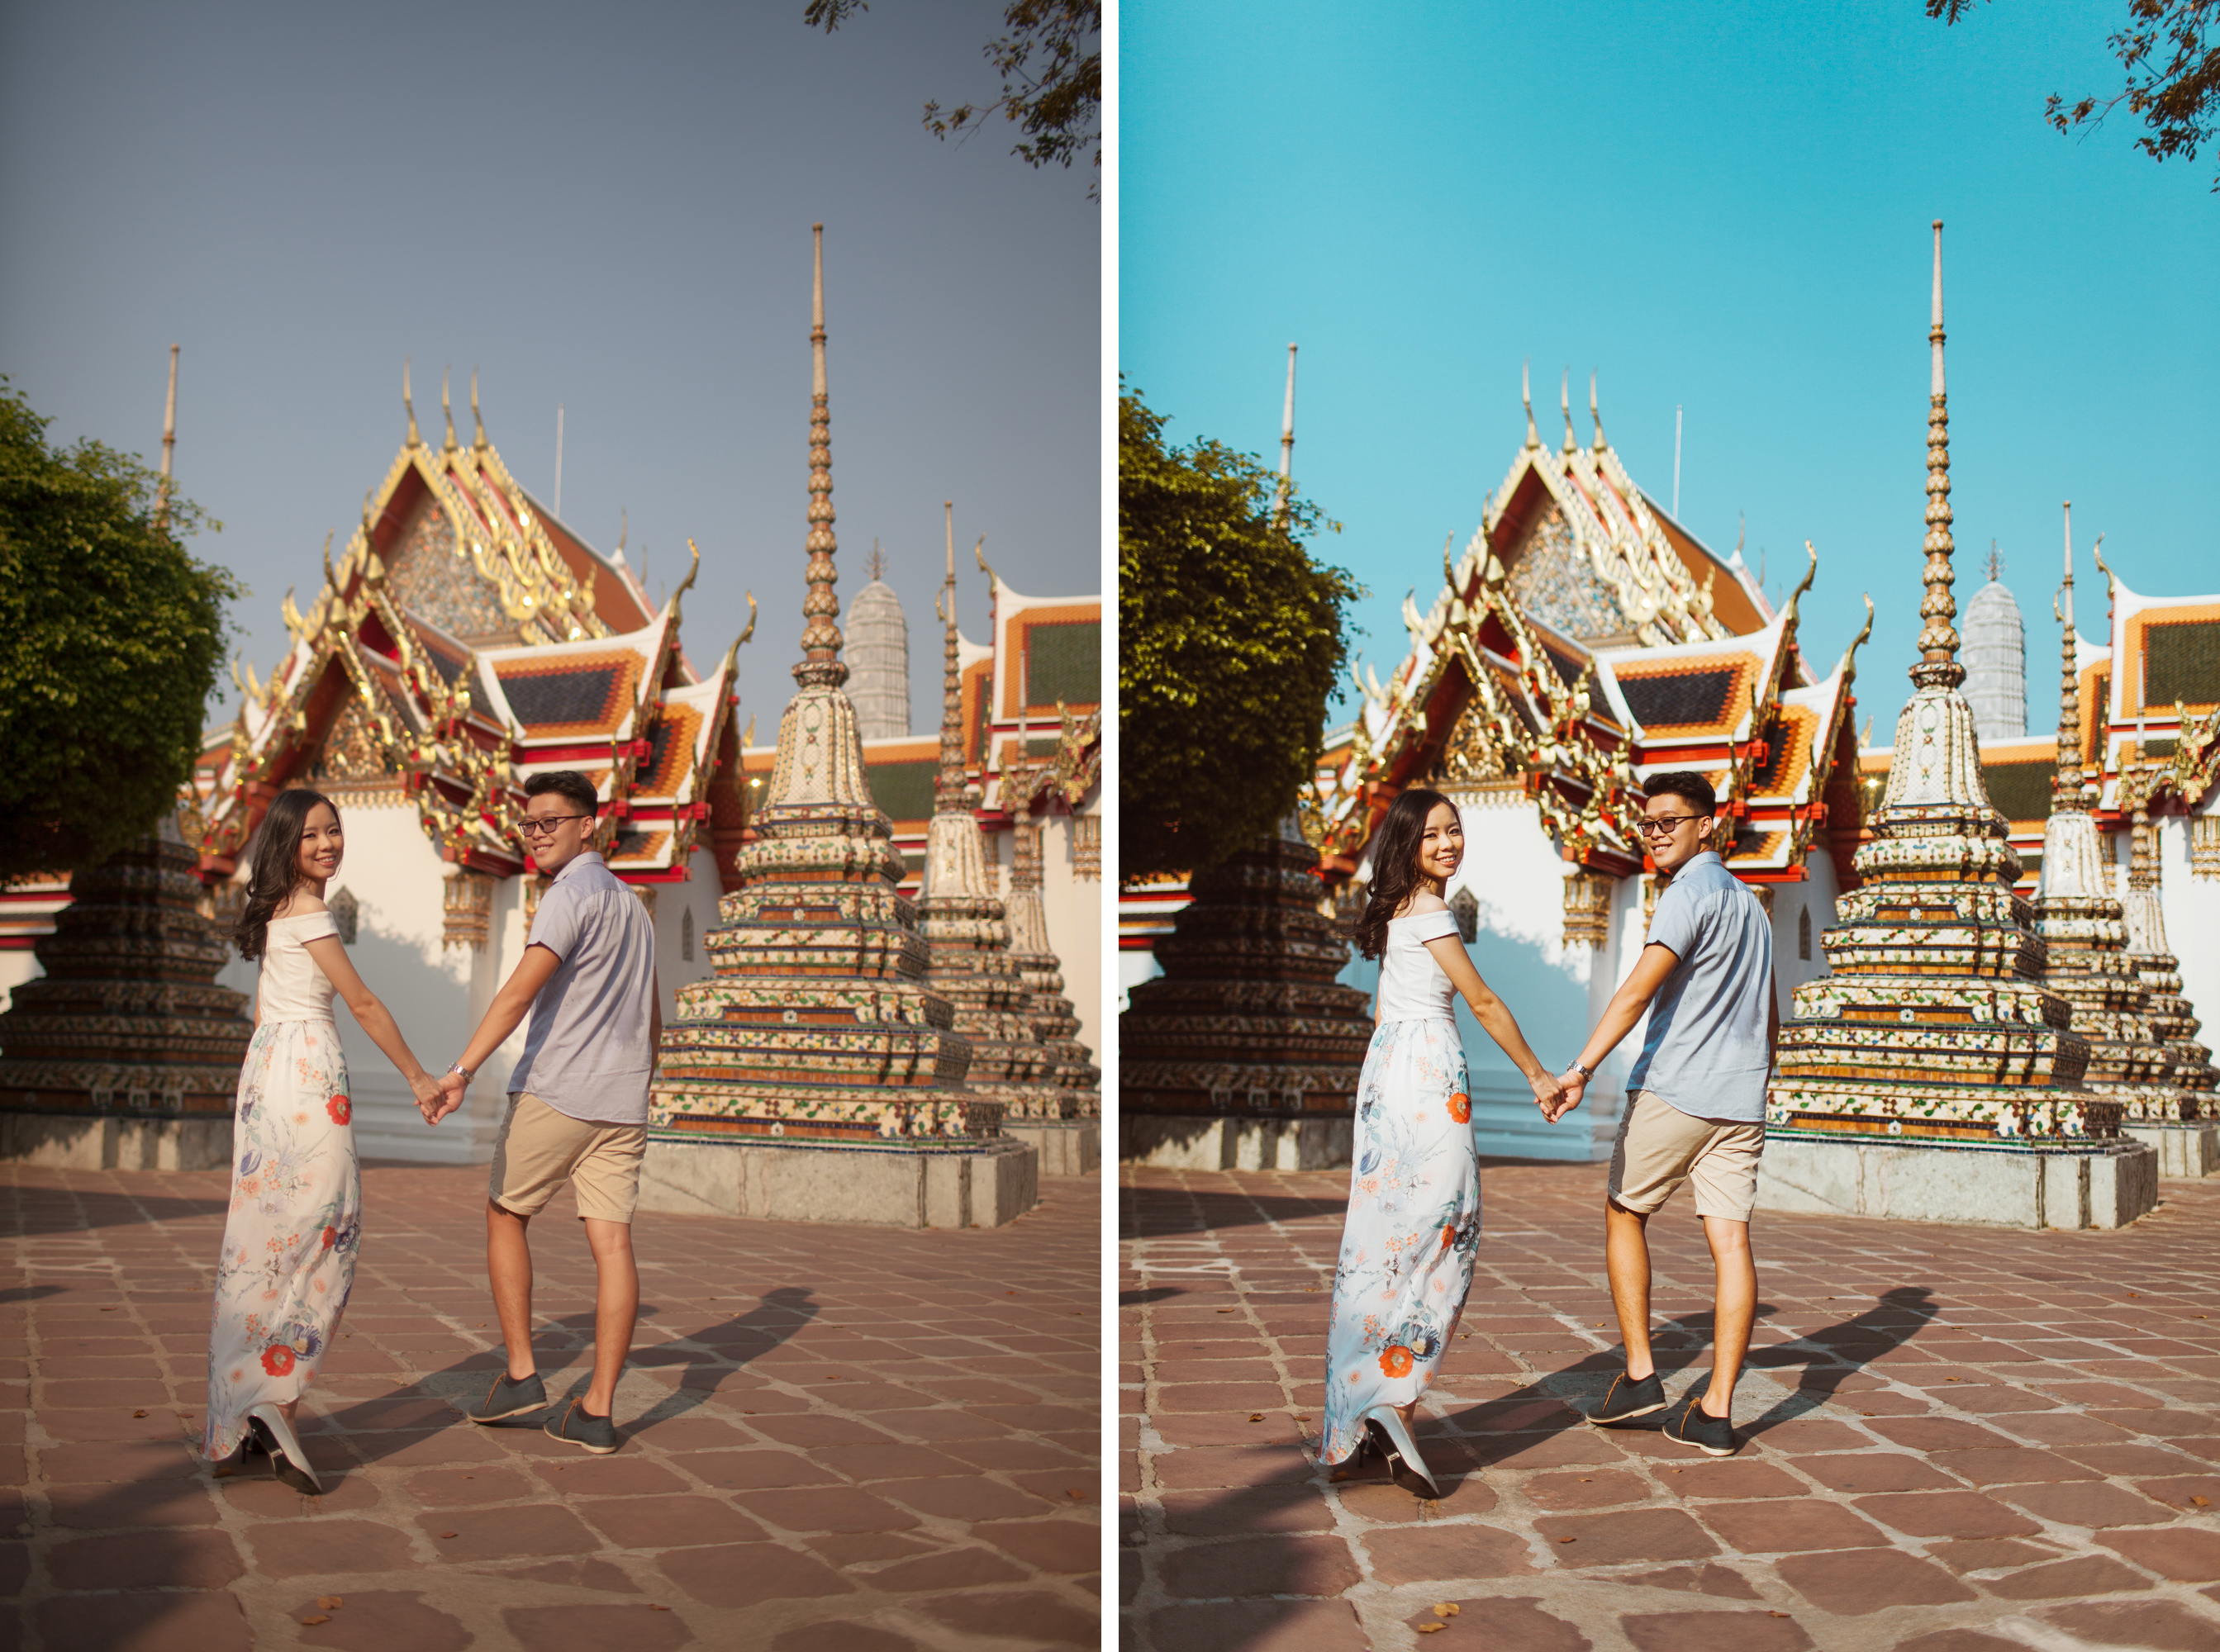 An Asian couple having a great time in Wat Pho, Bangkok.